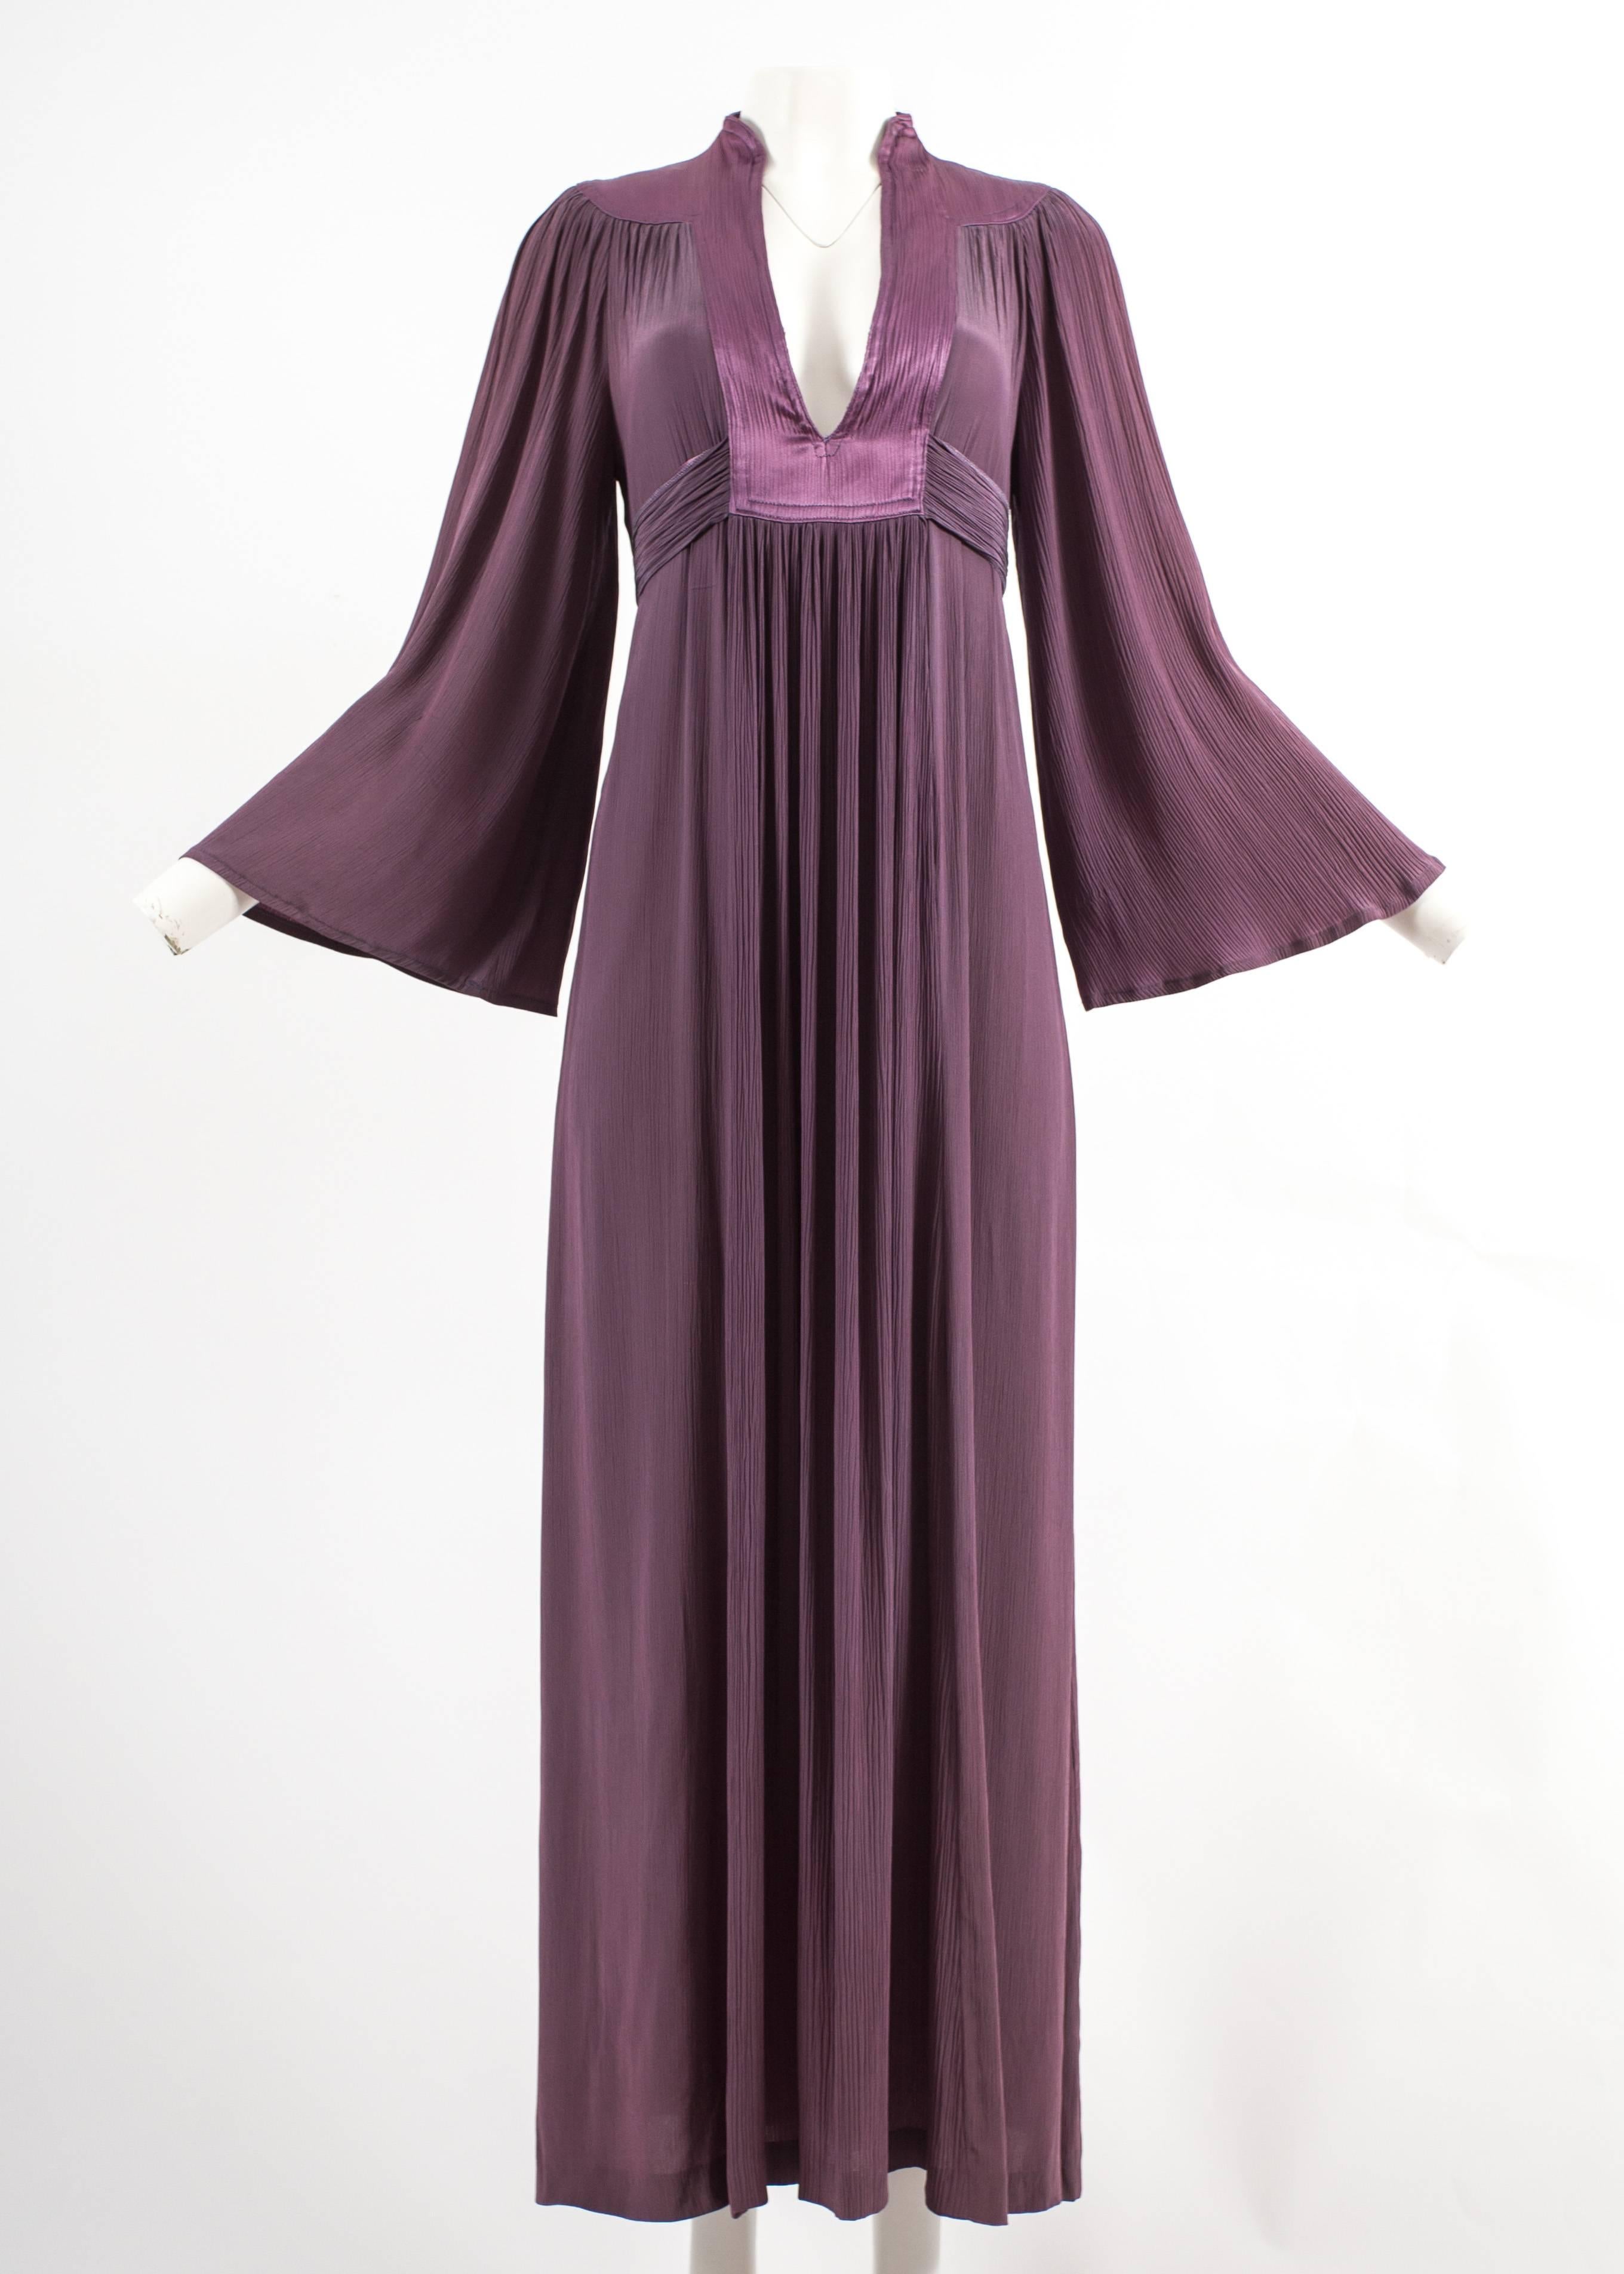 Ossie Clark 1970 pleated purple evening dress

- satin yoke 
- fluted sleeves
- attached waist belt
